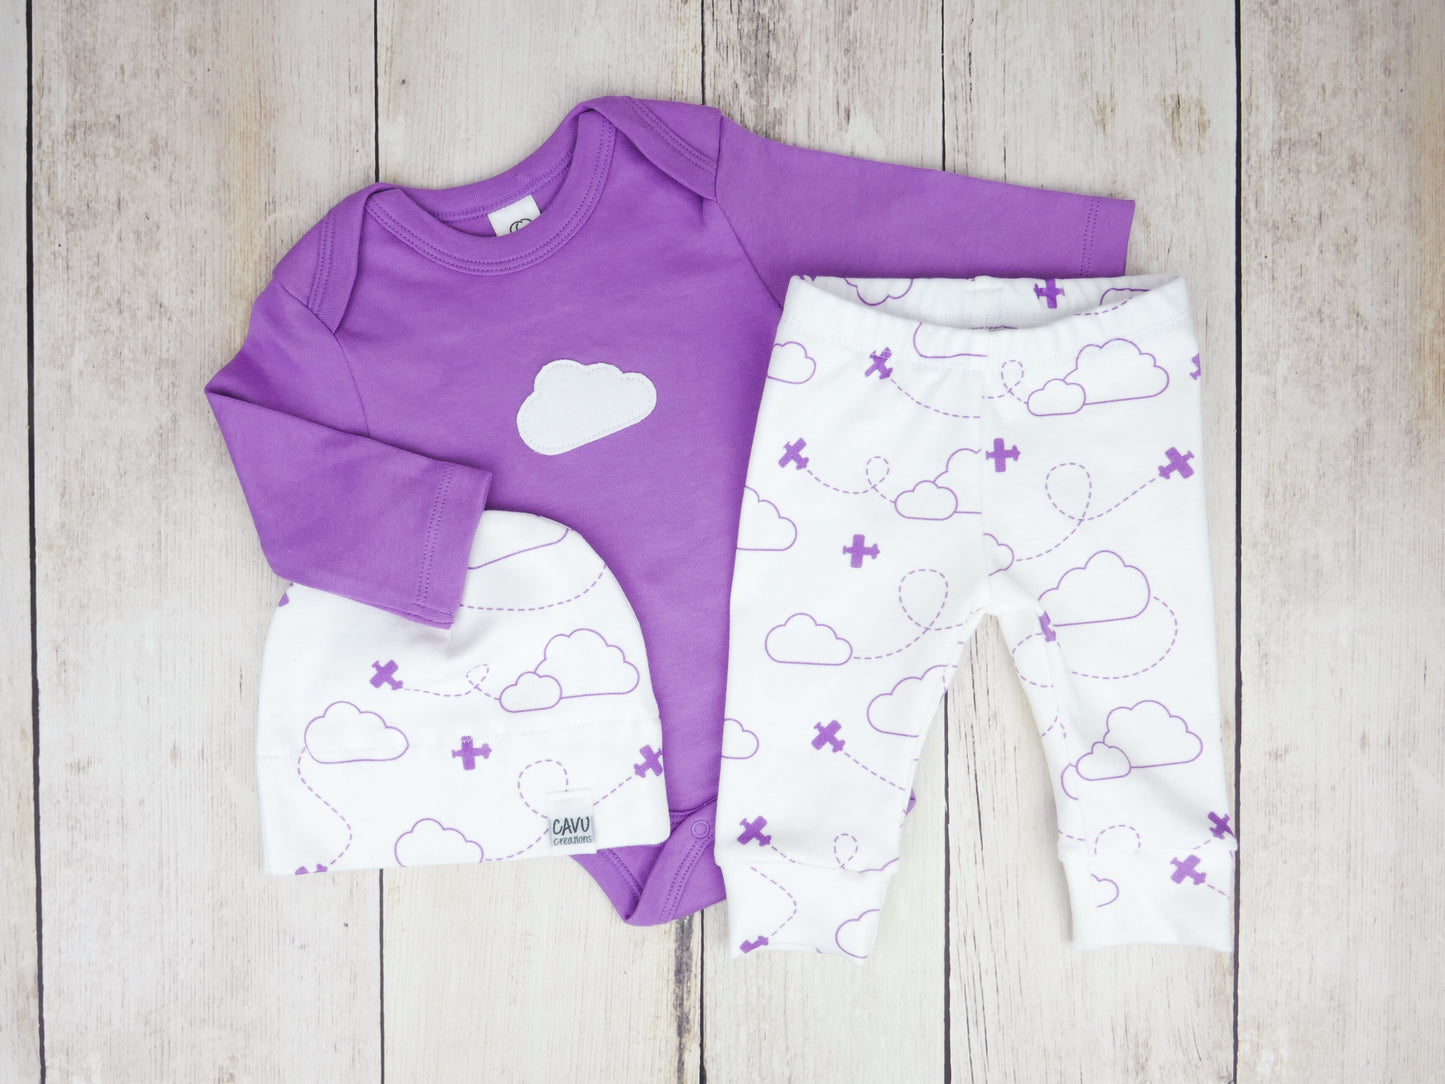 Airplanes in Clouds Organic Baby Leggings - Purple / White - CAVU Creations